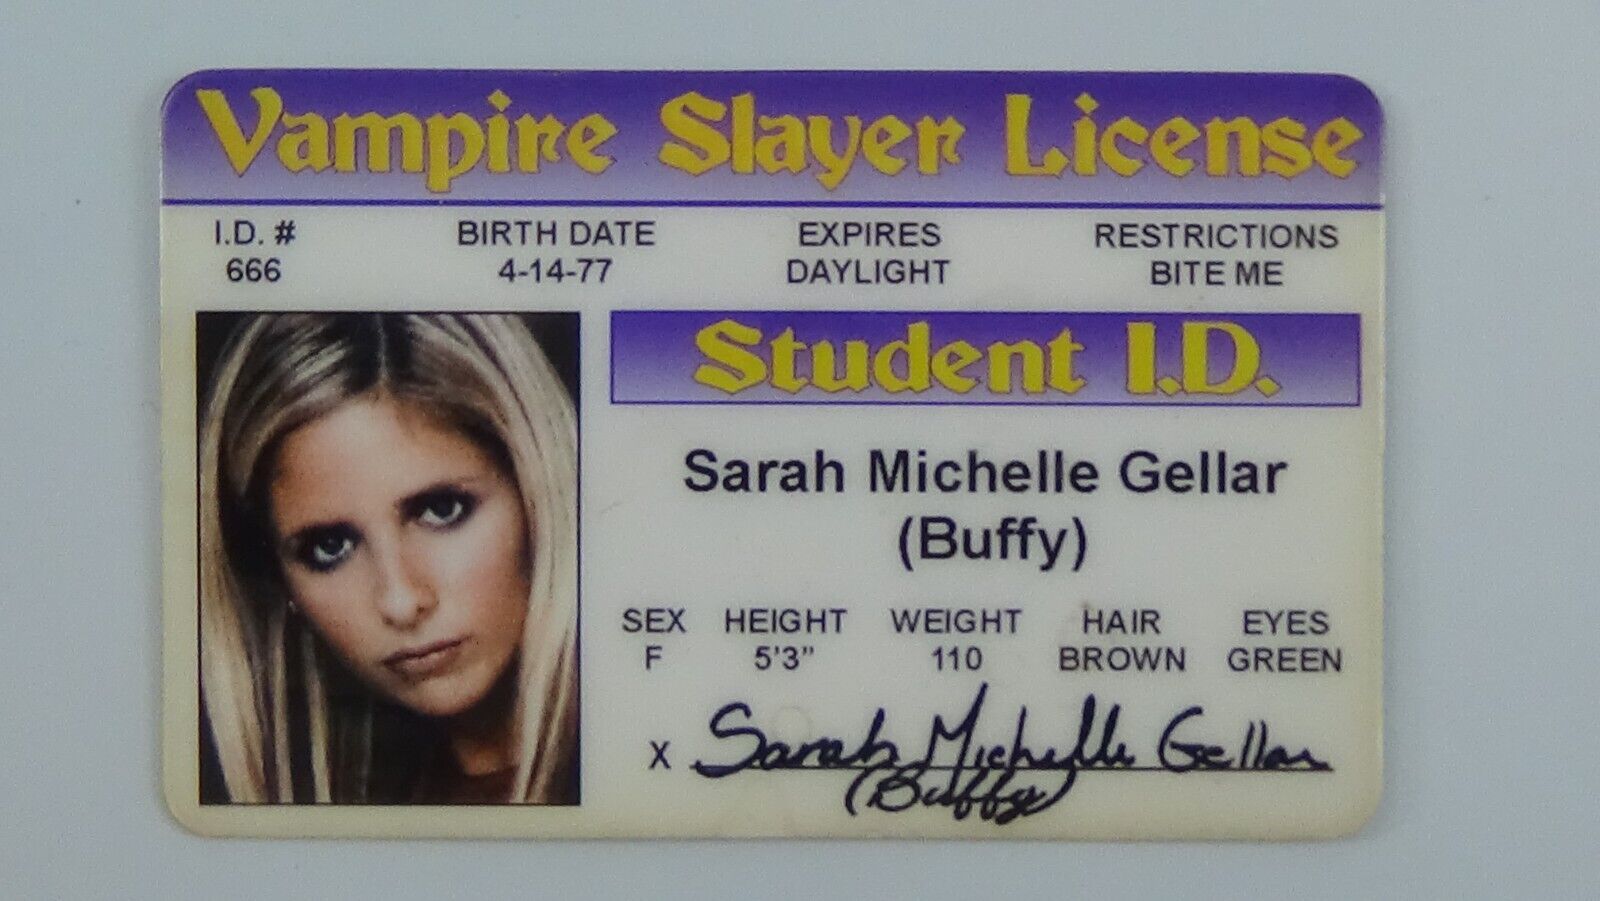 Original 2000 Vampire Slayer License Buffy Sarah Michelle Gellar ID Card  #960